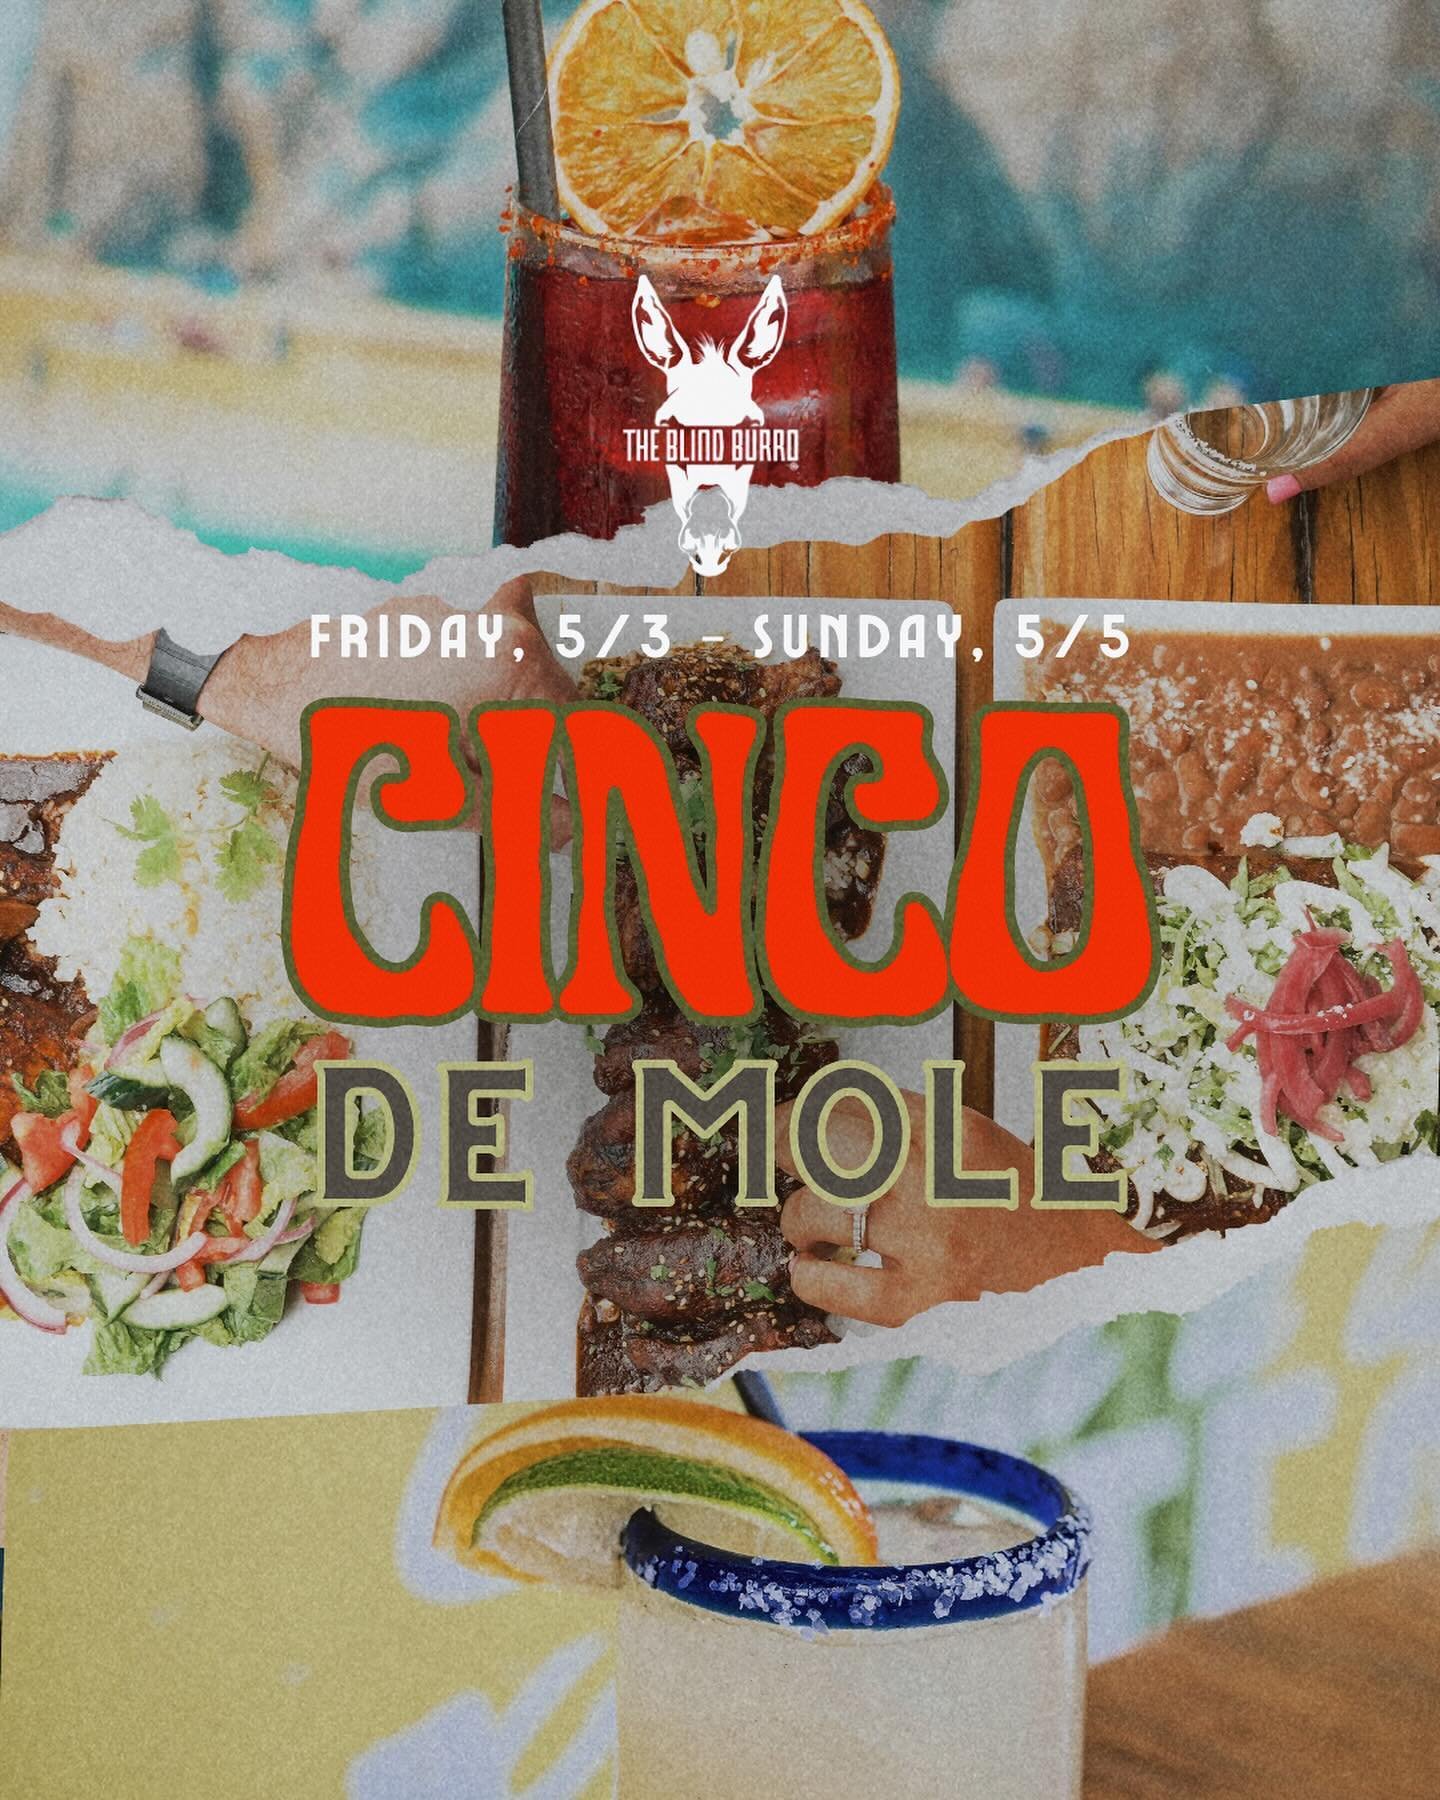 𝙃𝙤𝙡𝙮 𝑴𝒐𝒍𝒆! We&rsquo;re bringing Cinco de Mole to your Cinco De Mayo celebration. Enjoy 3 𝑴𝒐𝒍𝒆 dishes + drink &amp; margarita specials! The Burro Fiesta starts Friday, 5/3 through Sunday, 5/5! 🍹